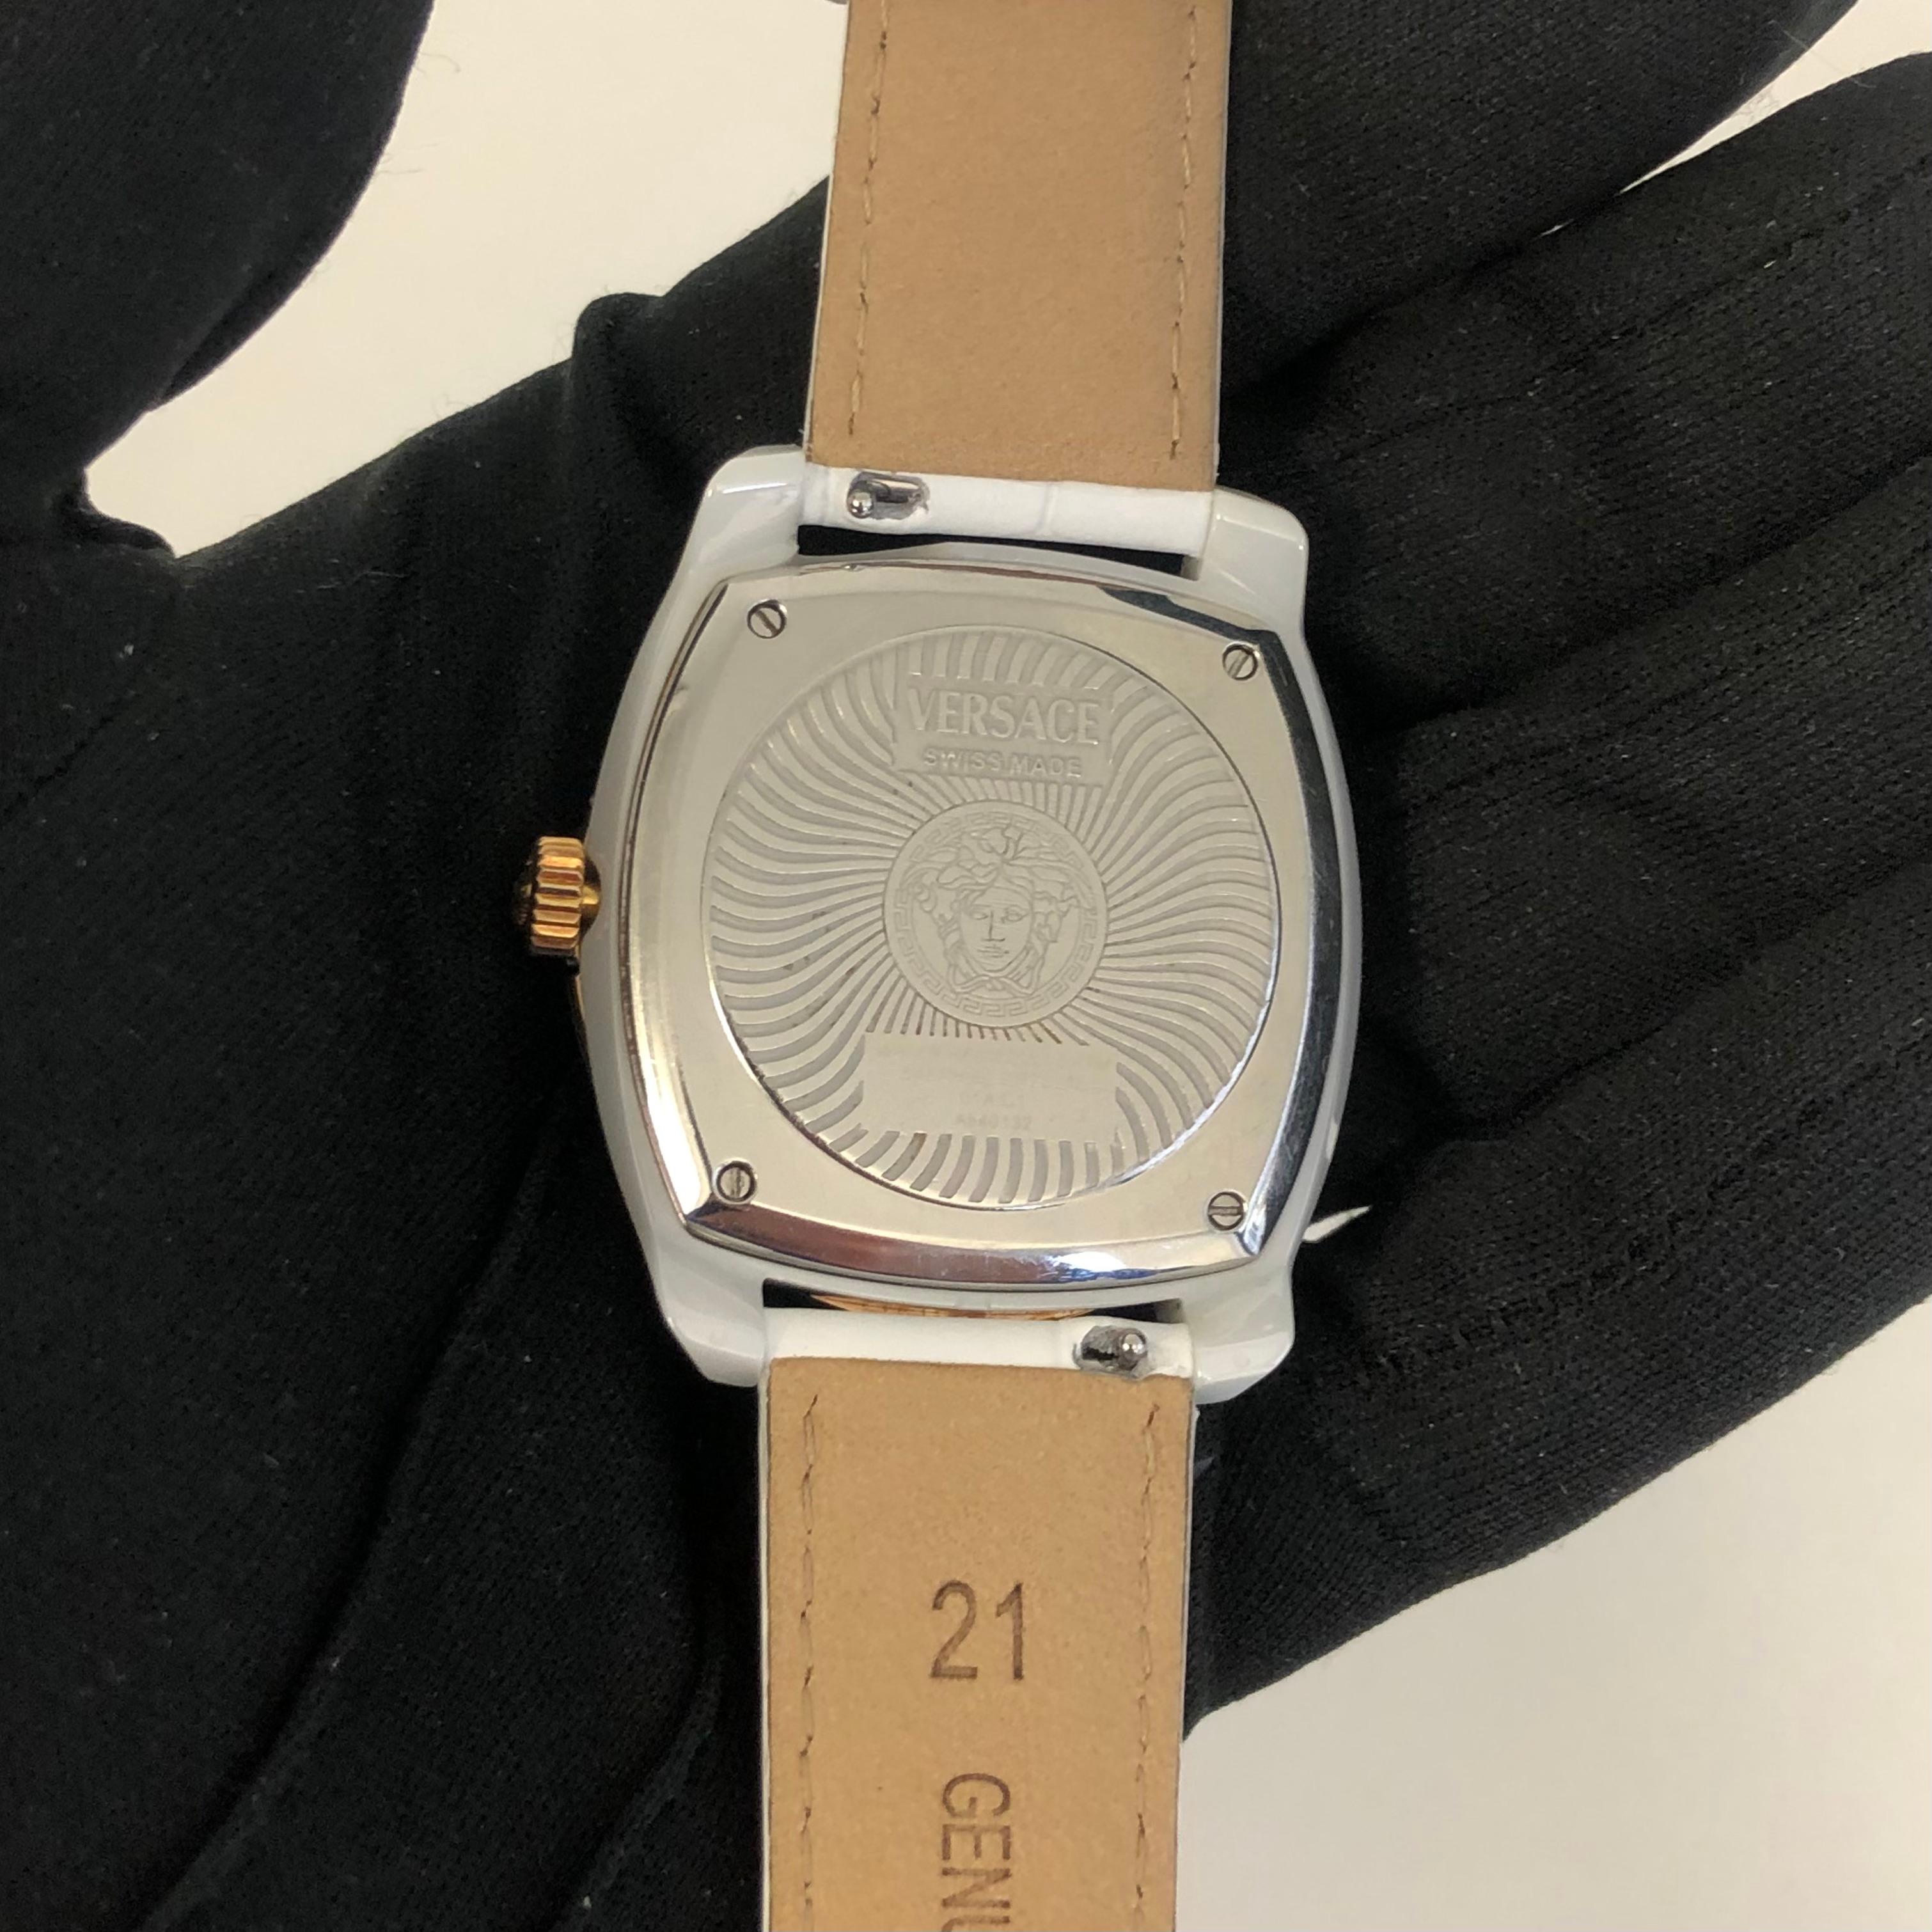 Versace Men’s DV One Automatic Ceramic Watch 2